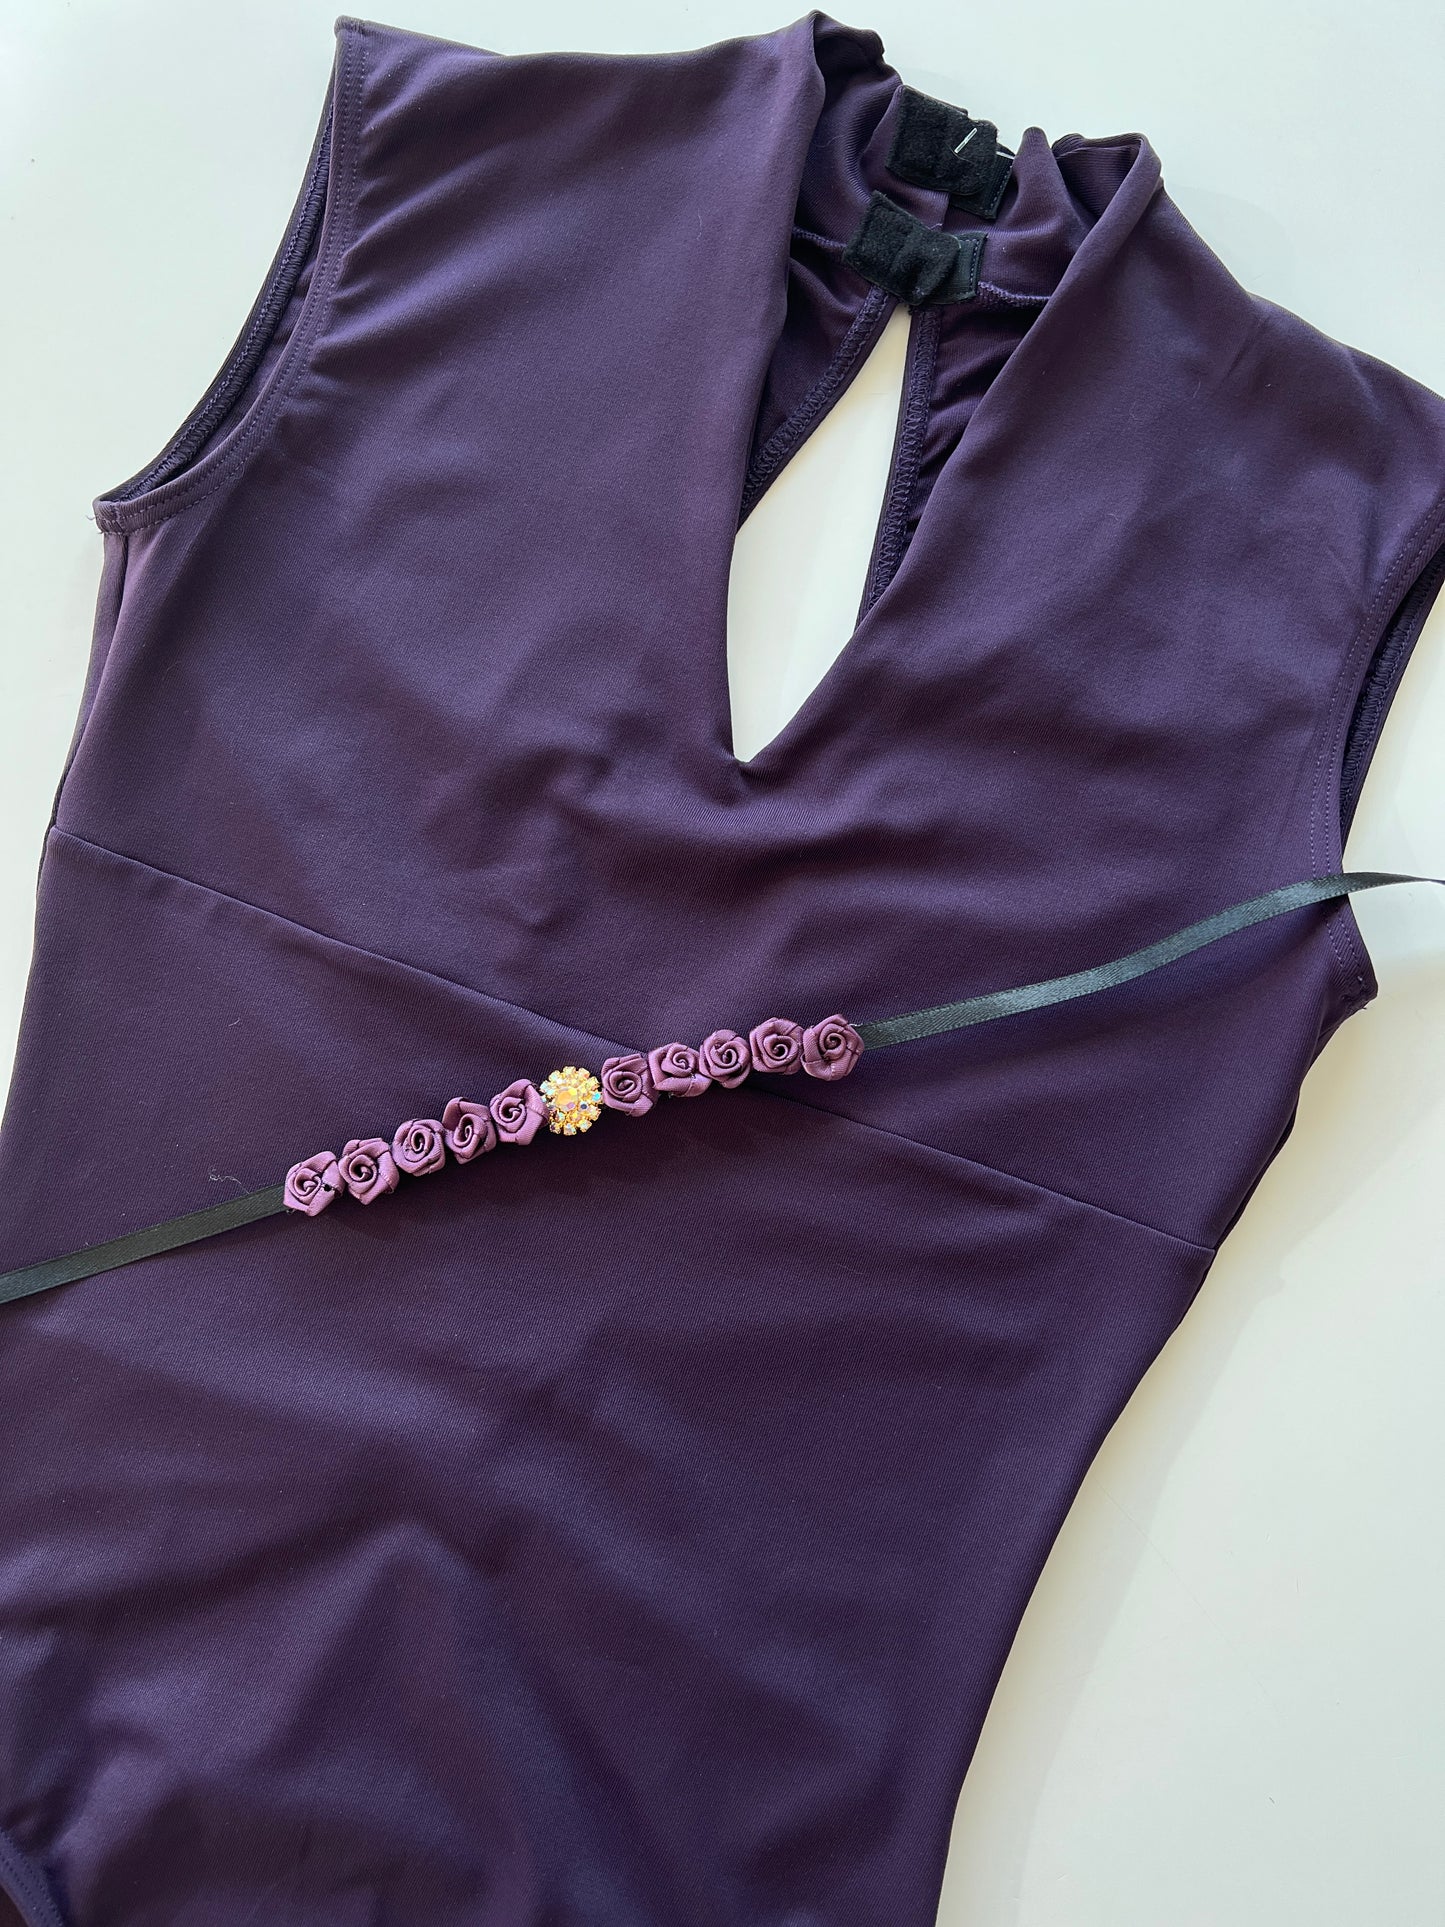 Ballet Hair Bun Wrap -The Small Purple and Gold Diamonte The Collective Dancewear